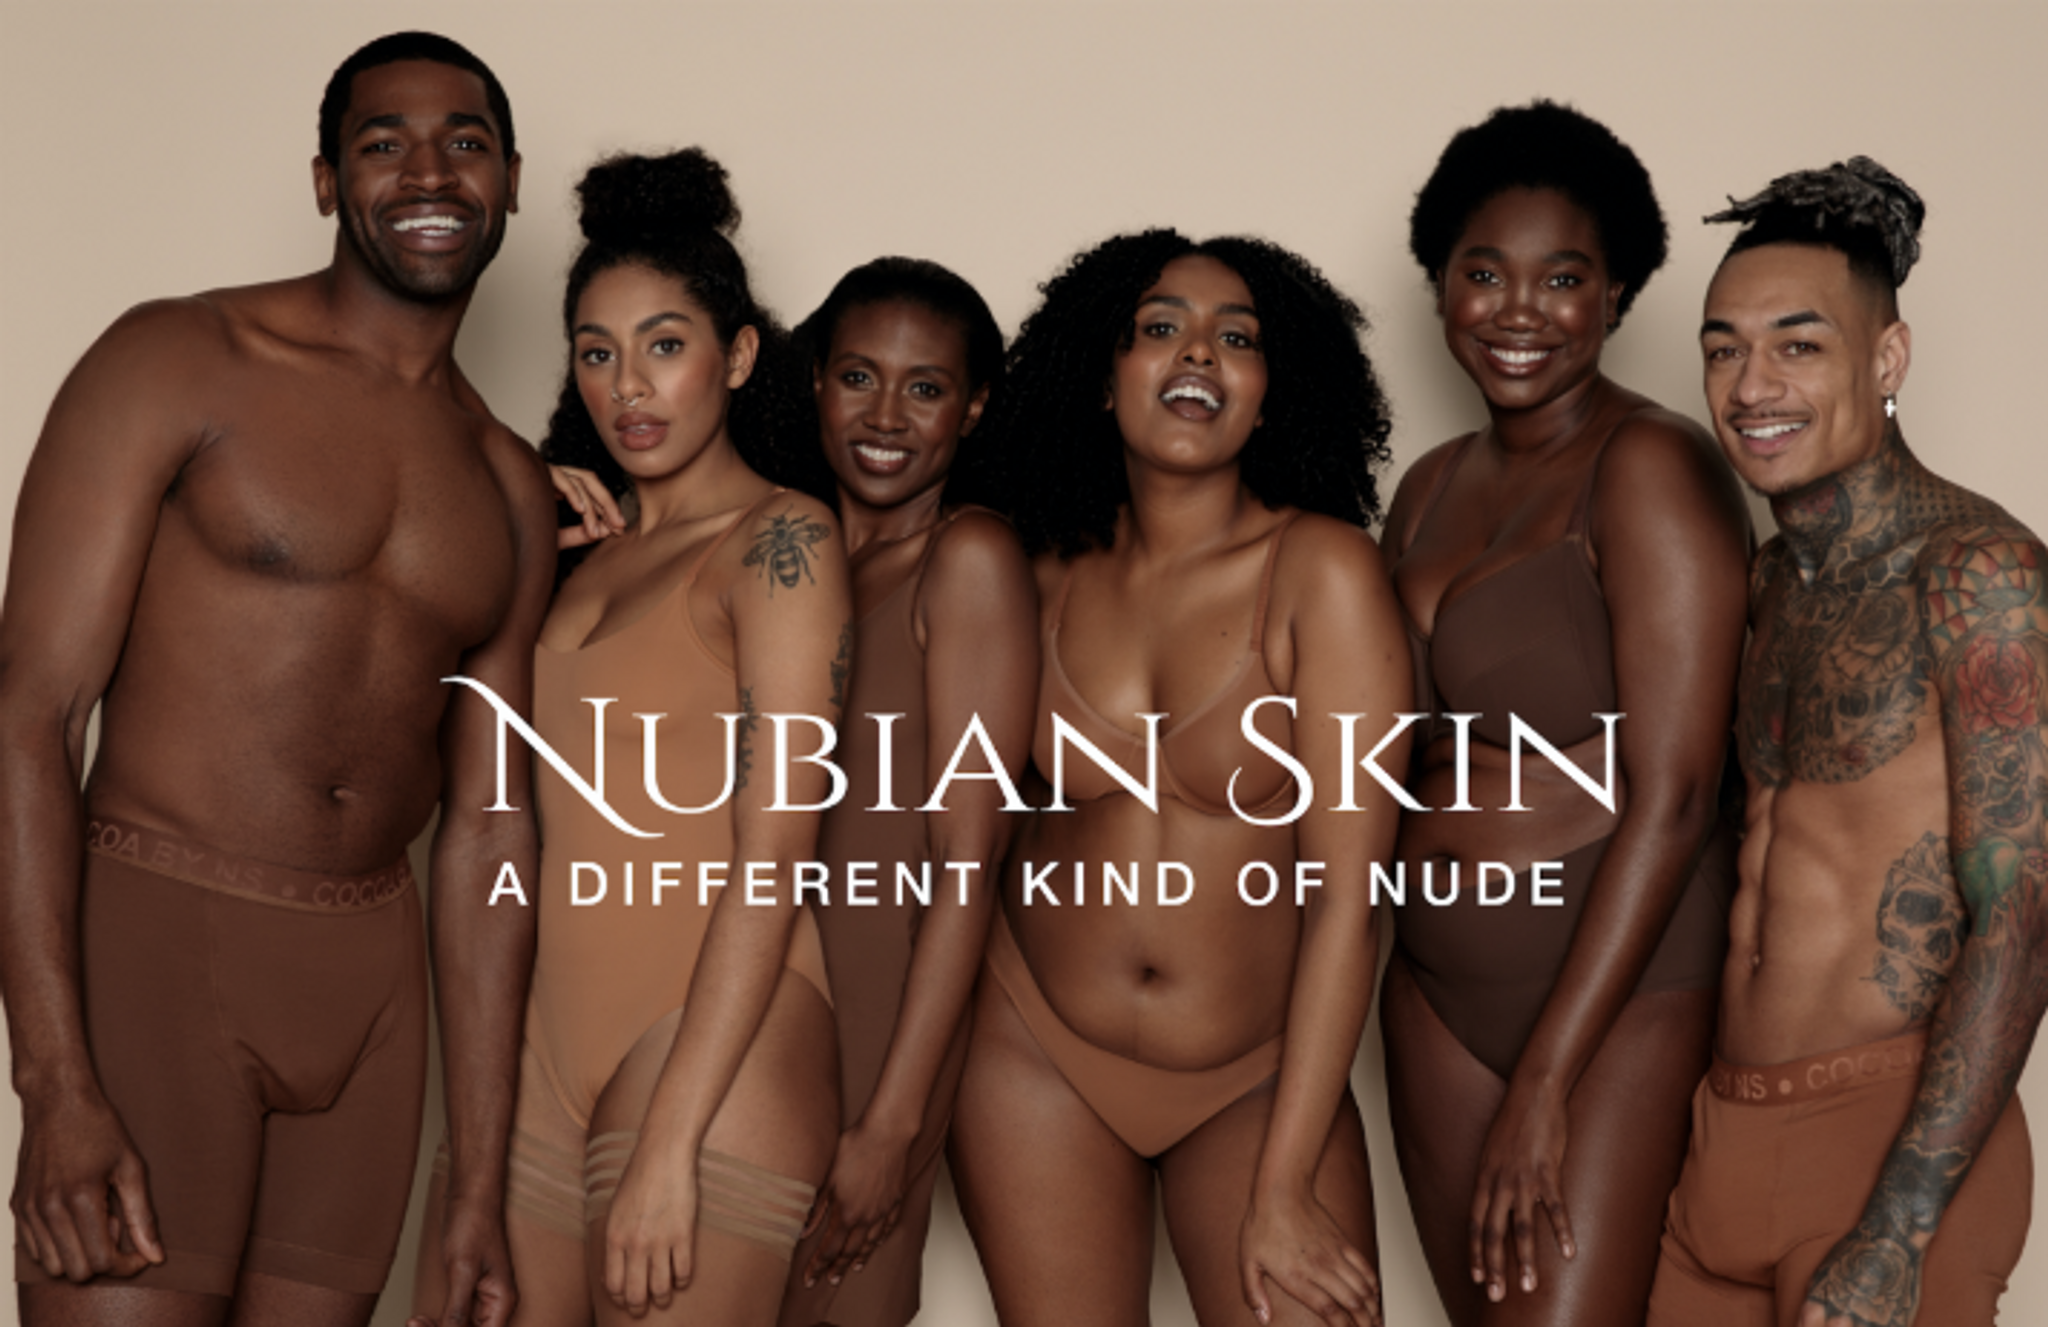 Nubian Skin gives 'nude' underwear inclusive update